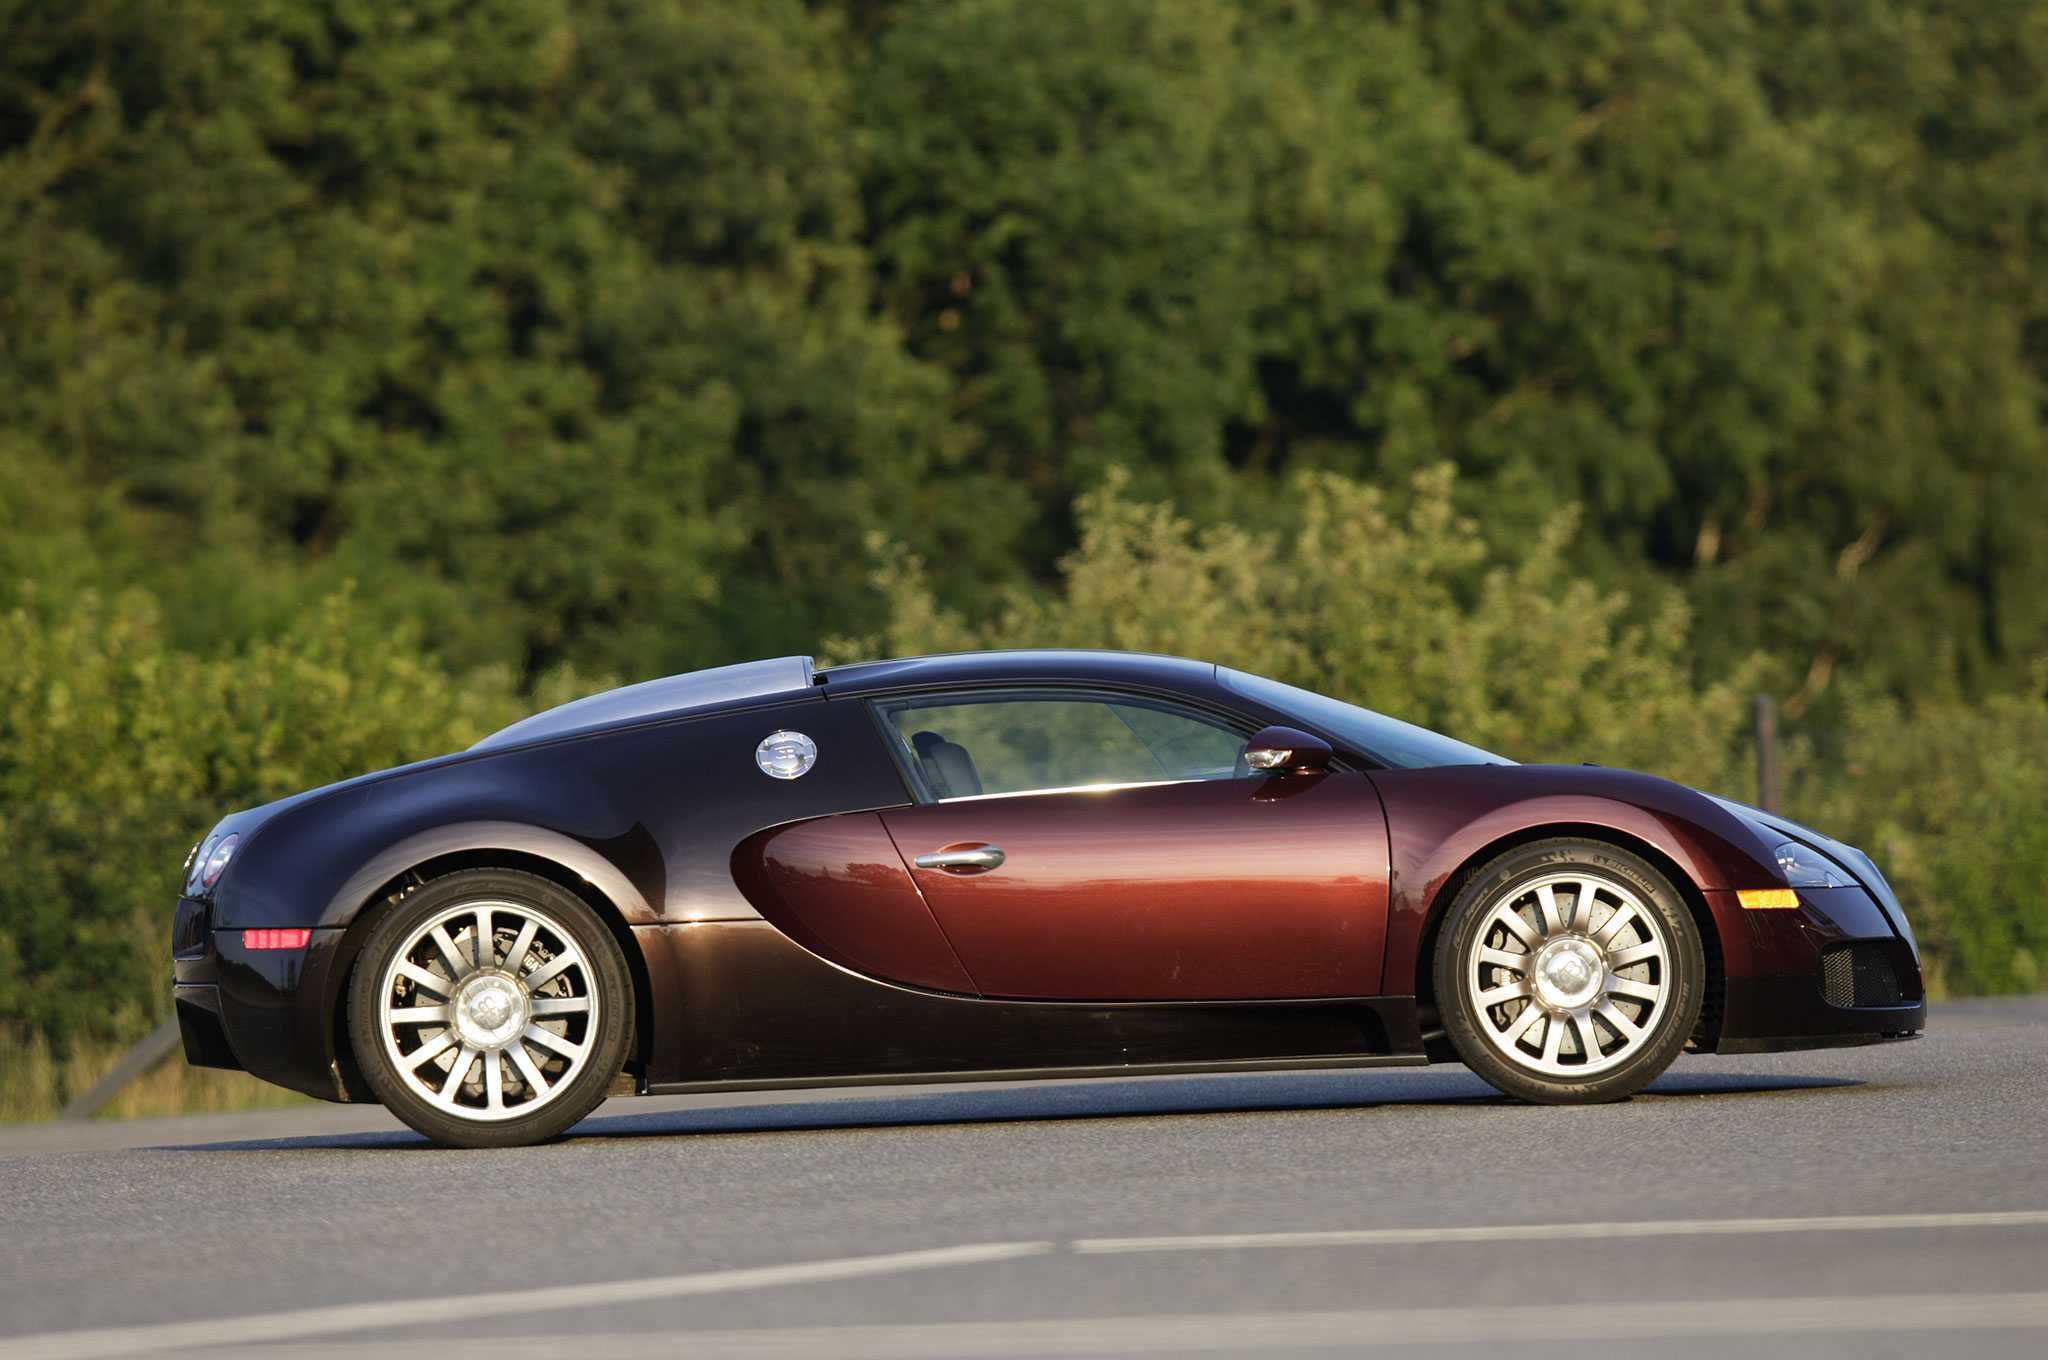 Bugatti Veyron Eb Wallpaper Picture For iPhone HD Pics Qimplink